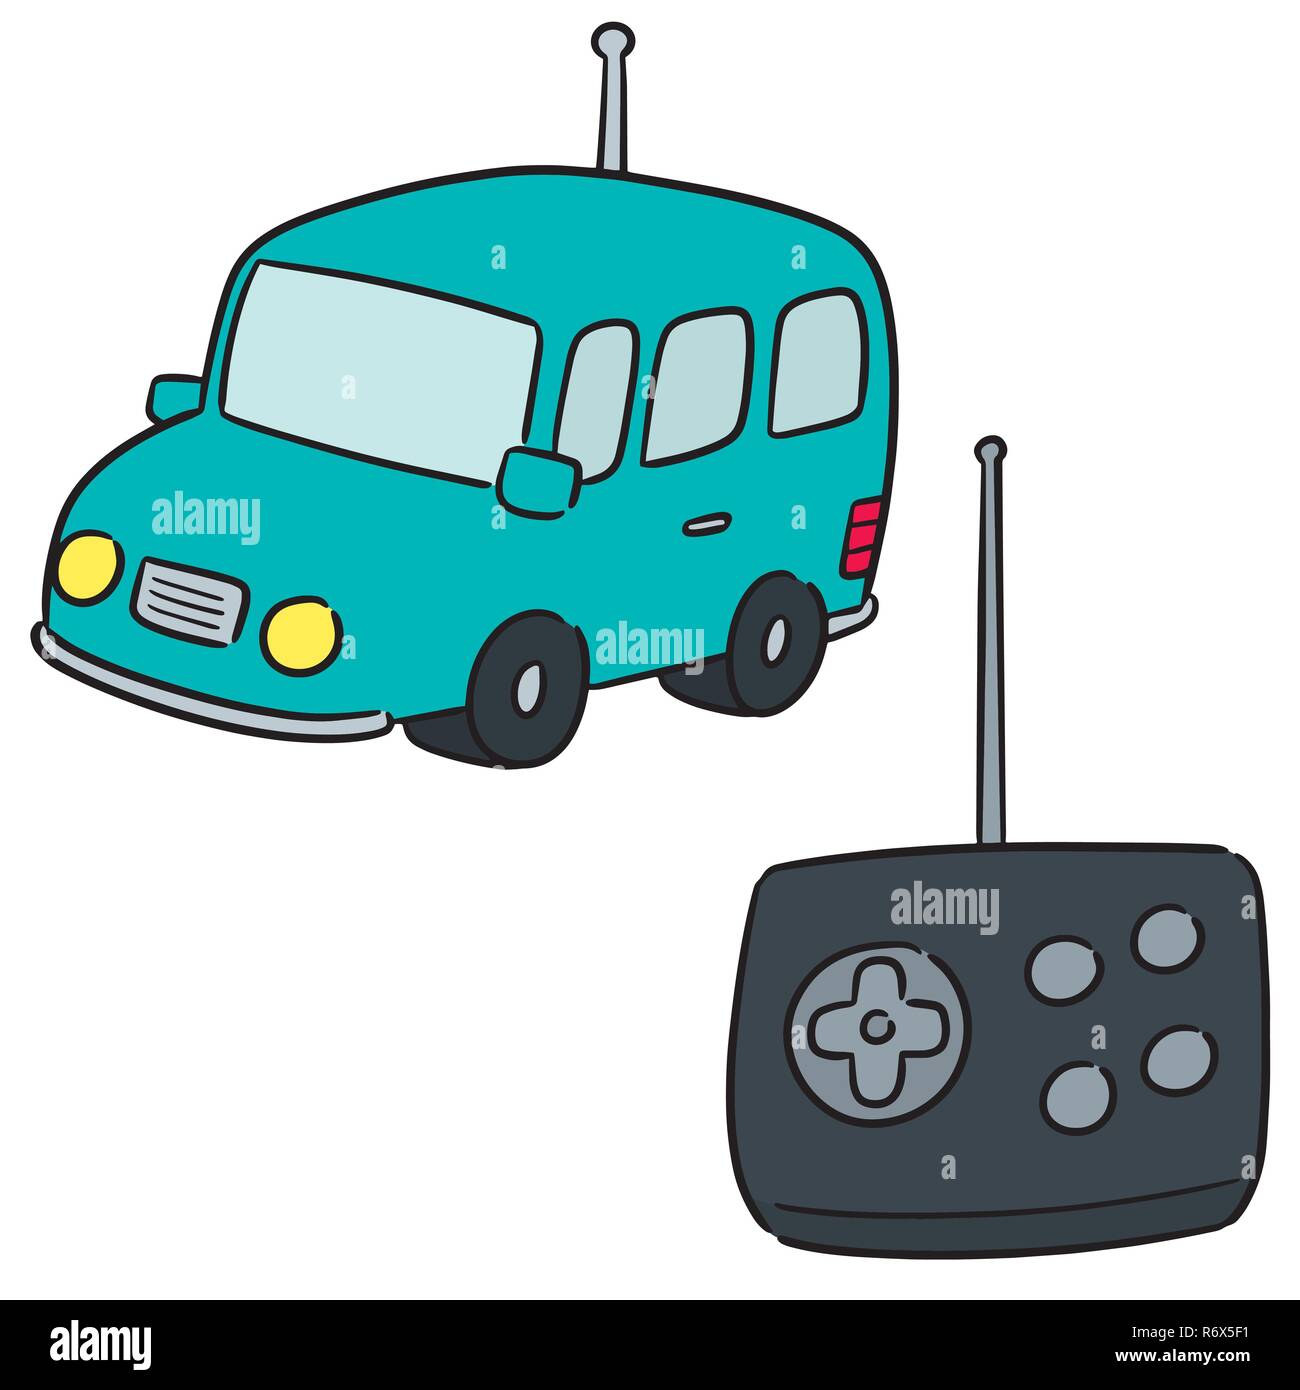 cartoon remote control car